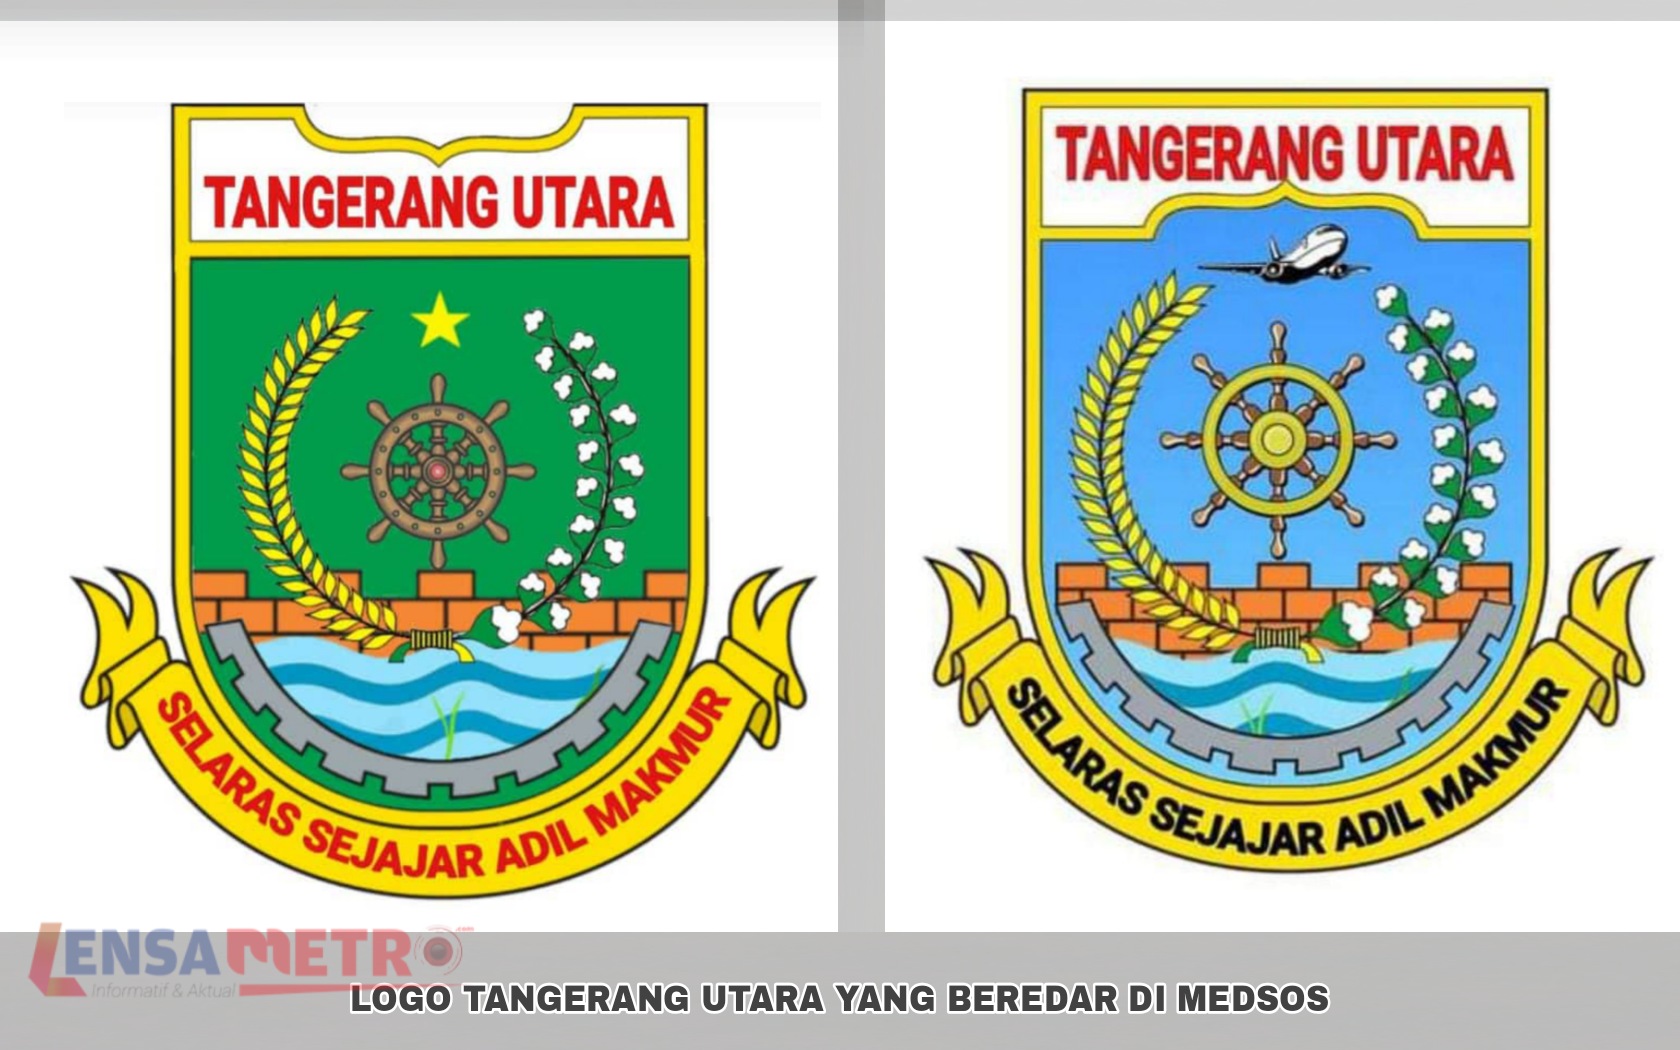 Logo Mirip Pemerintahan Bertulis Tangerang Utara Beredar di Medsos, Gerindra : Sudah Selayaknya!